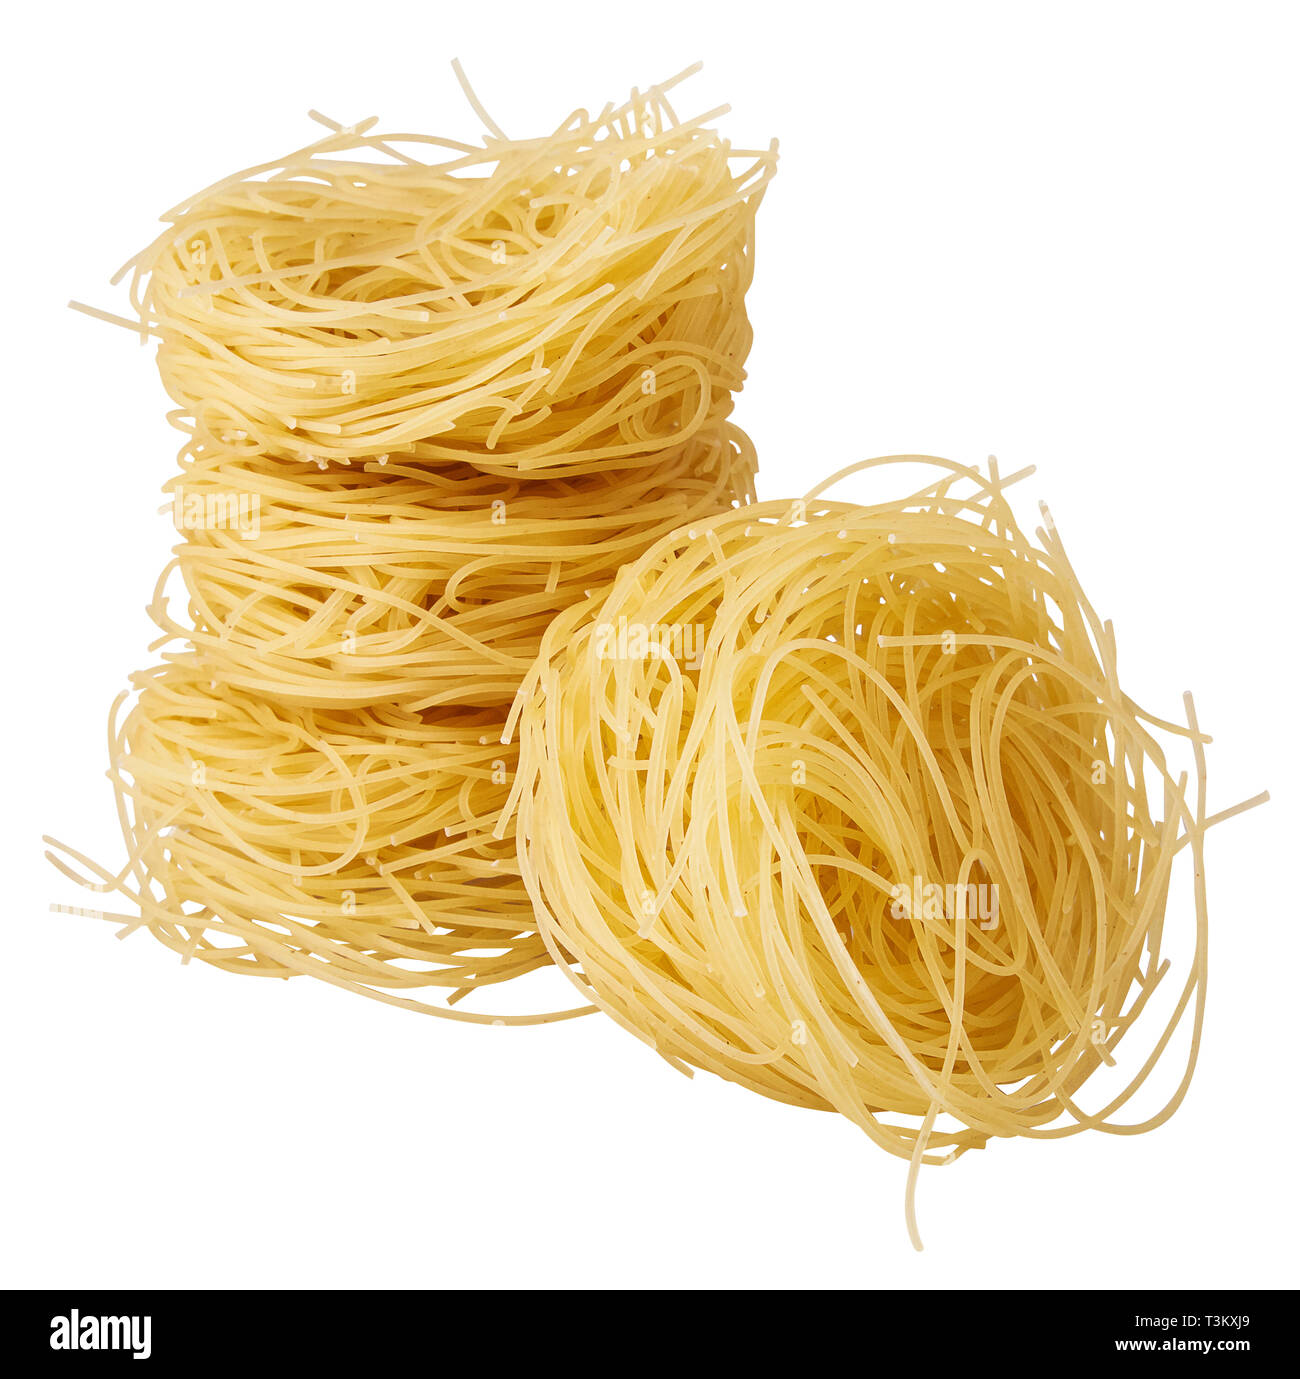 Capelli d'angelo, Angel's hair - pasta.  Homemade pasta. Italian Cuisine. Egg noodles. Italian pasta tagliatelle nest isolated Stock Photo